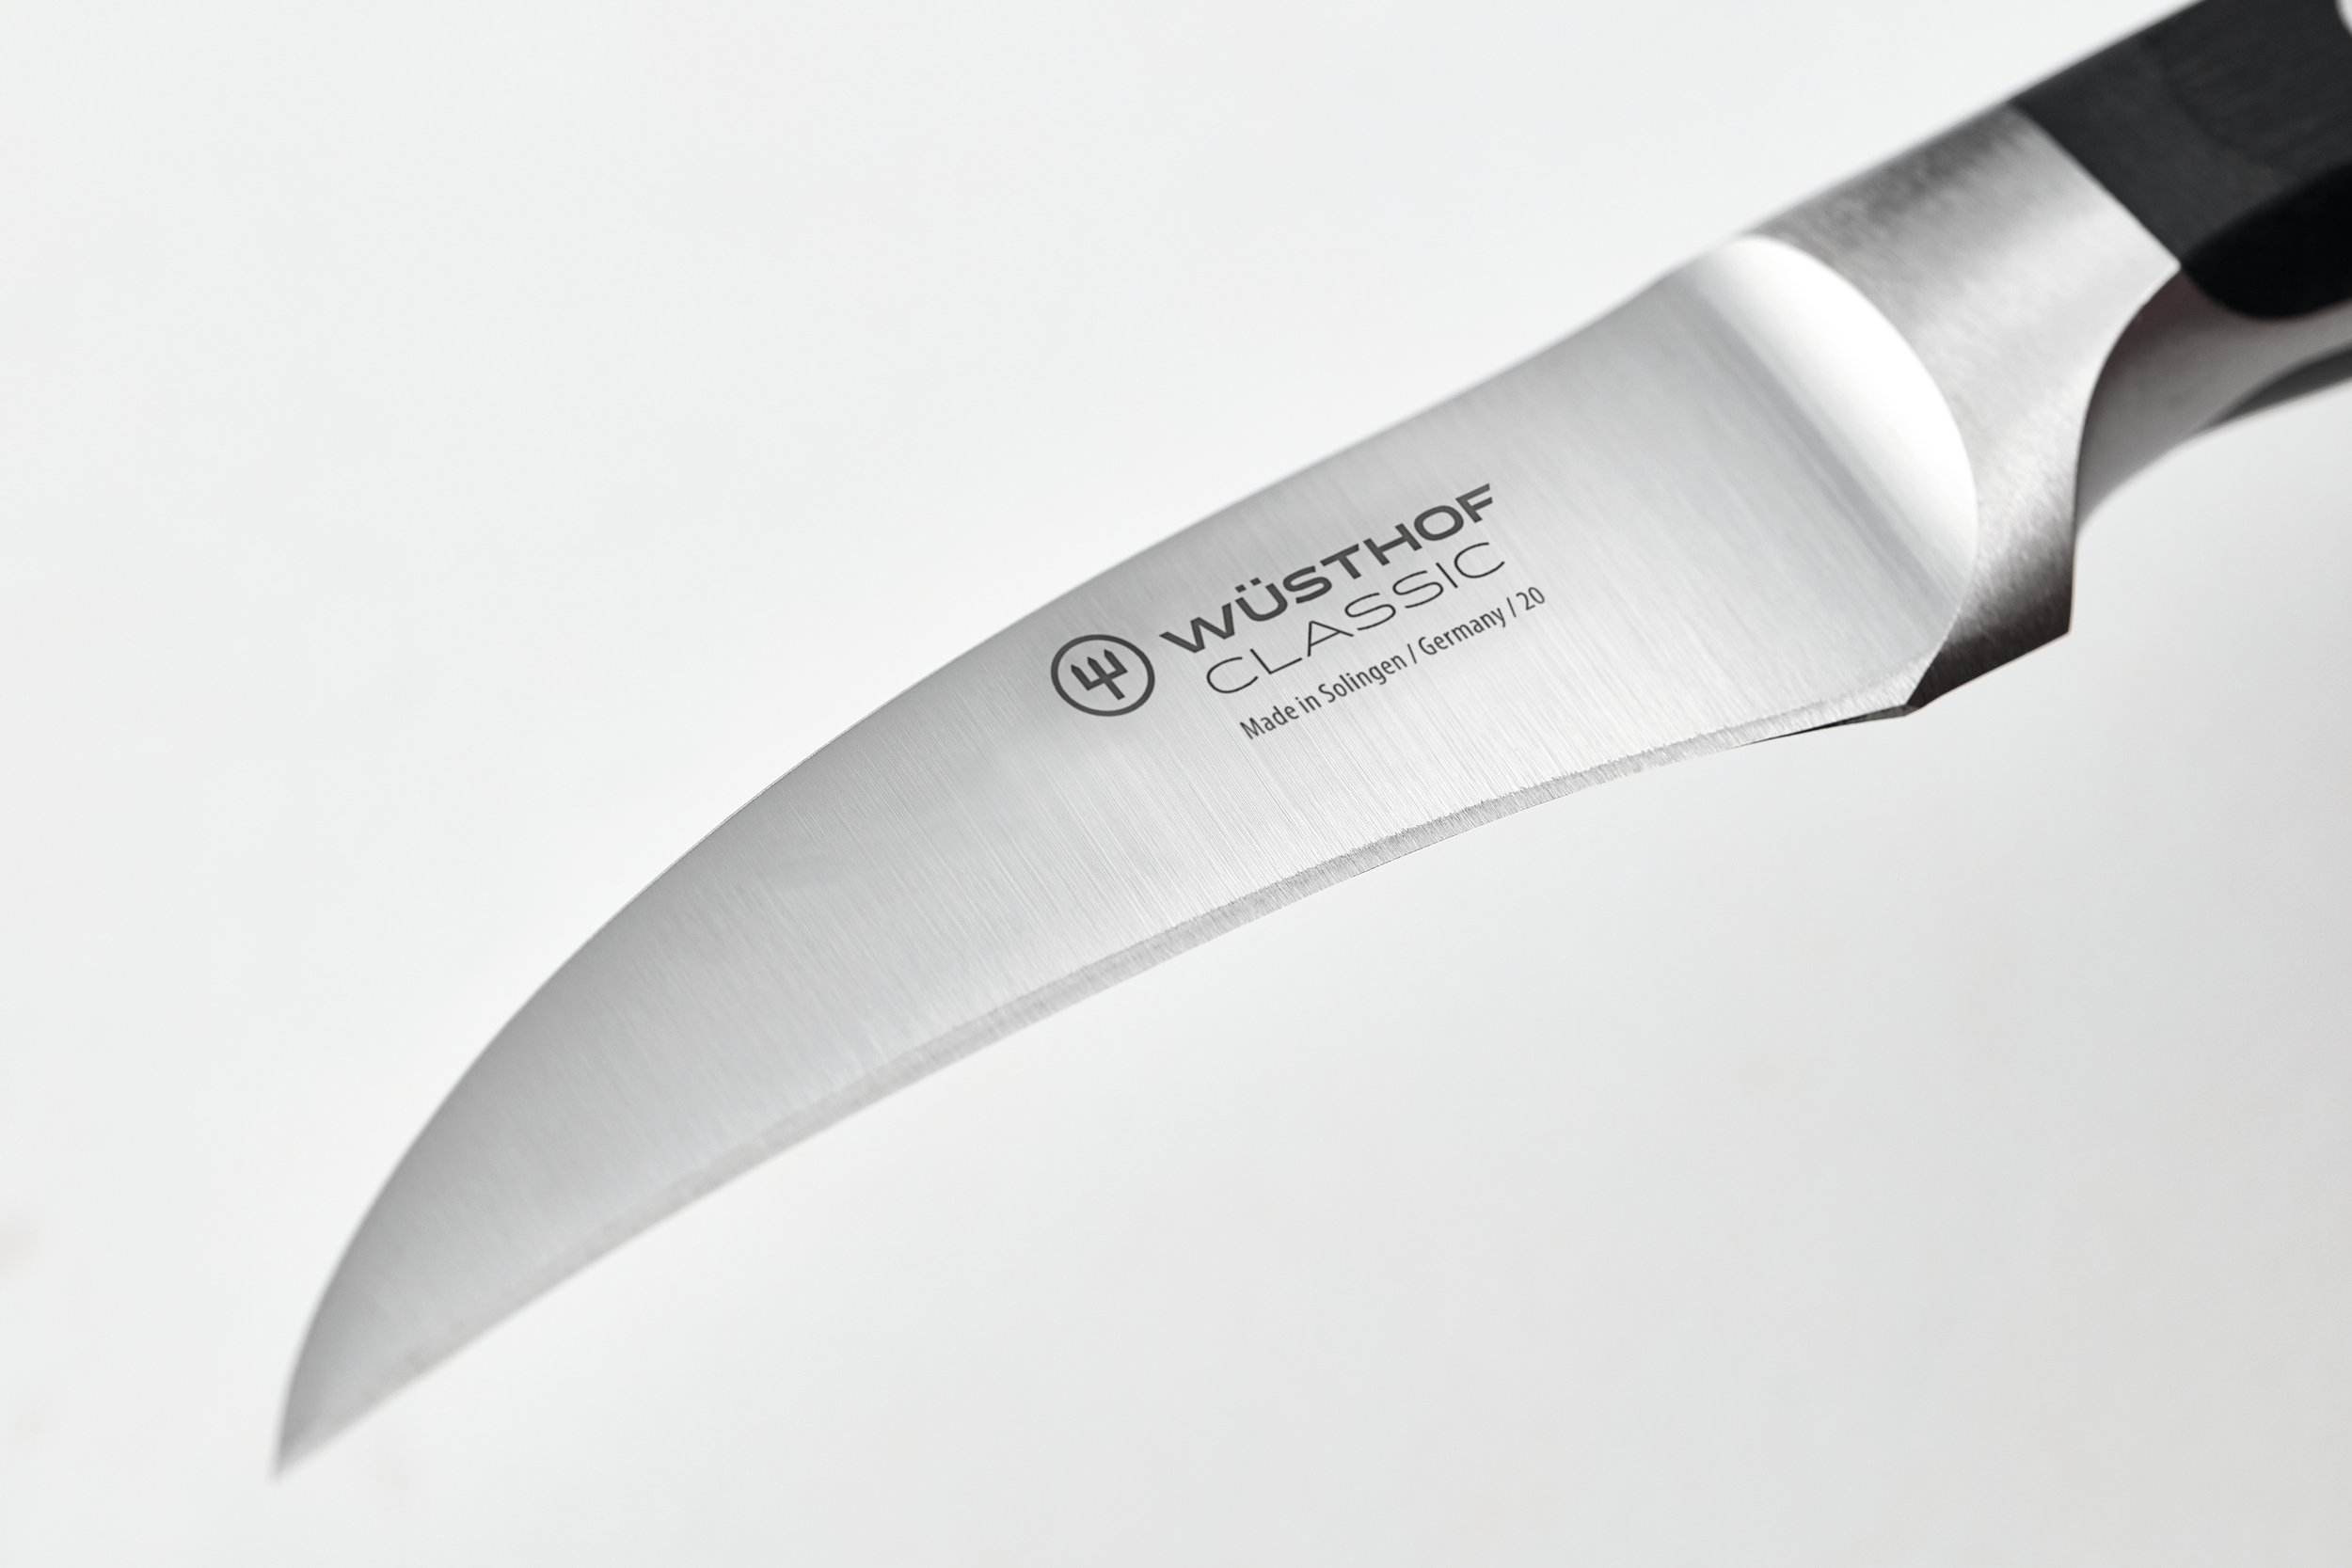 V2 Series 2.75-Inch Peeling/Tourne Knife, Forged German Steel, 1020434